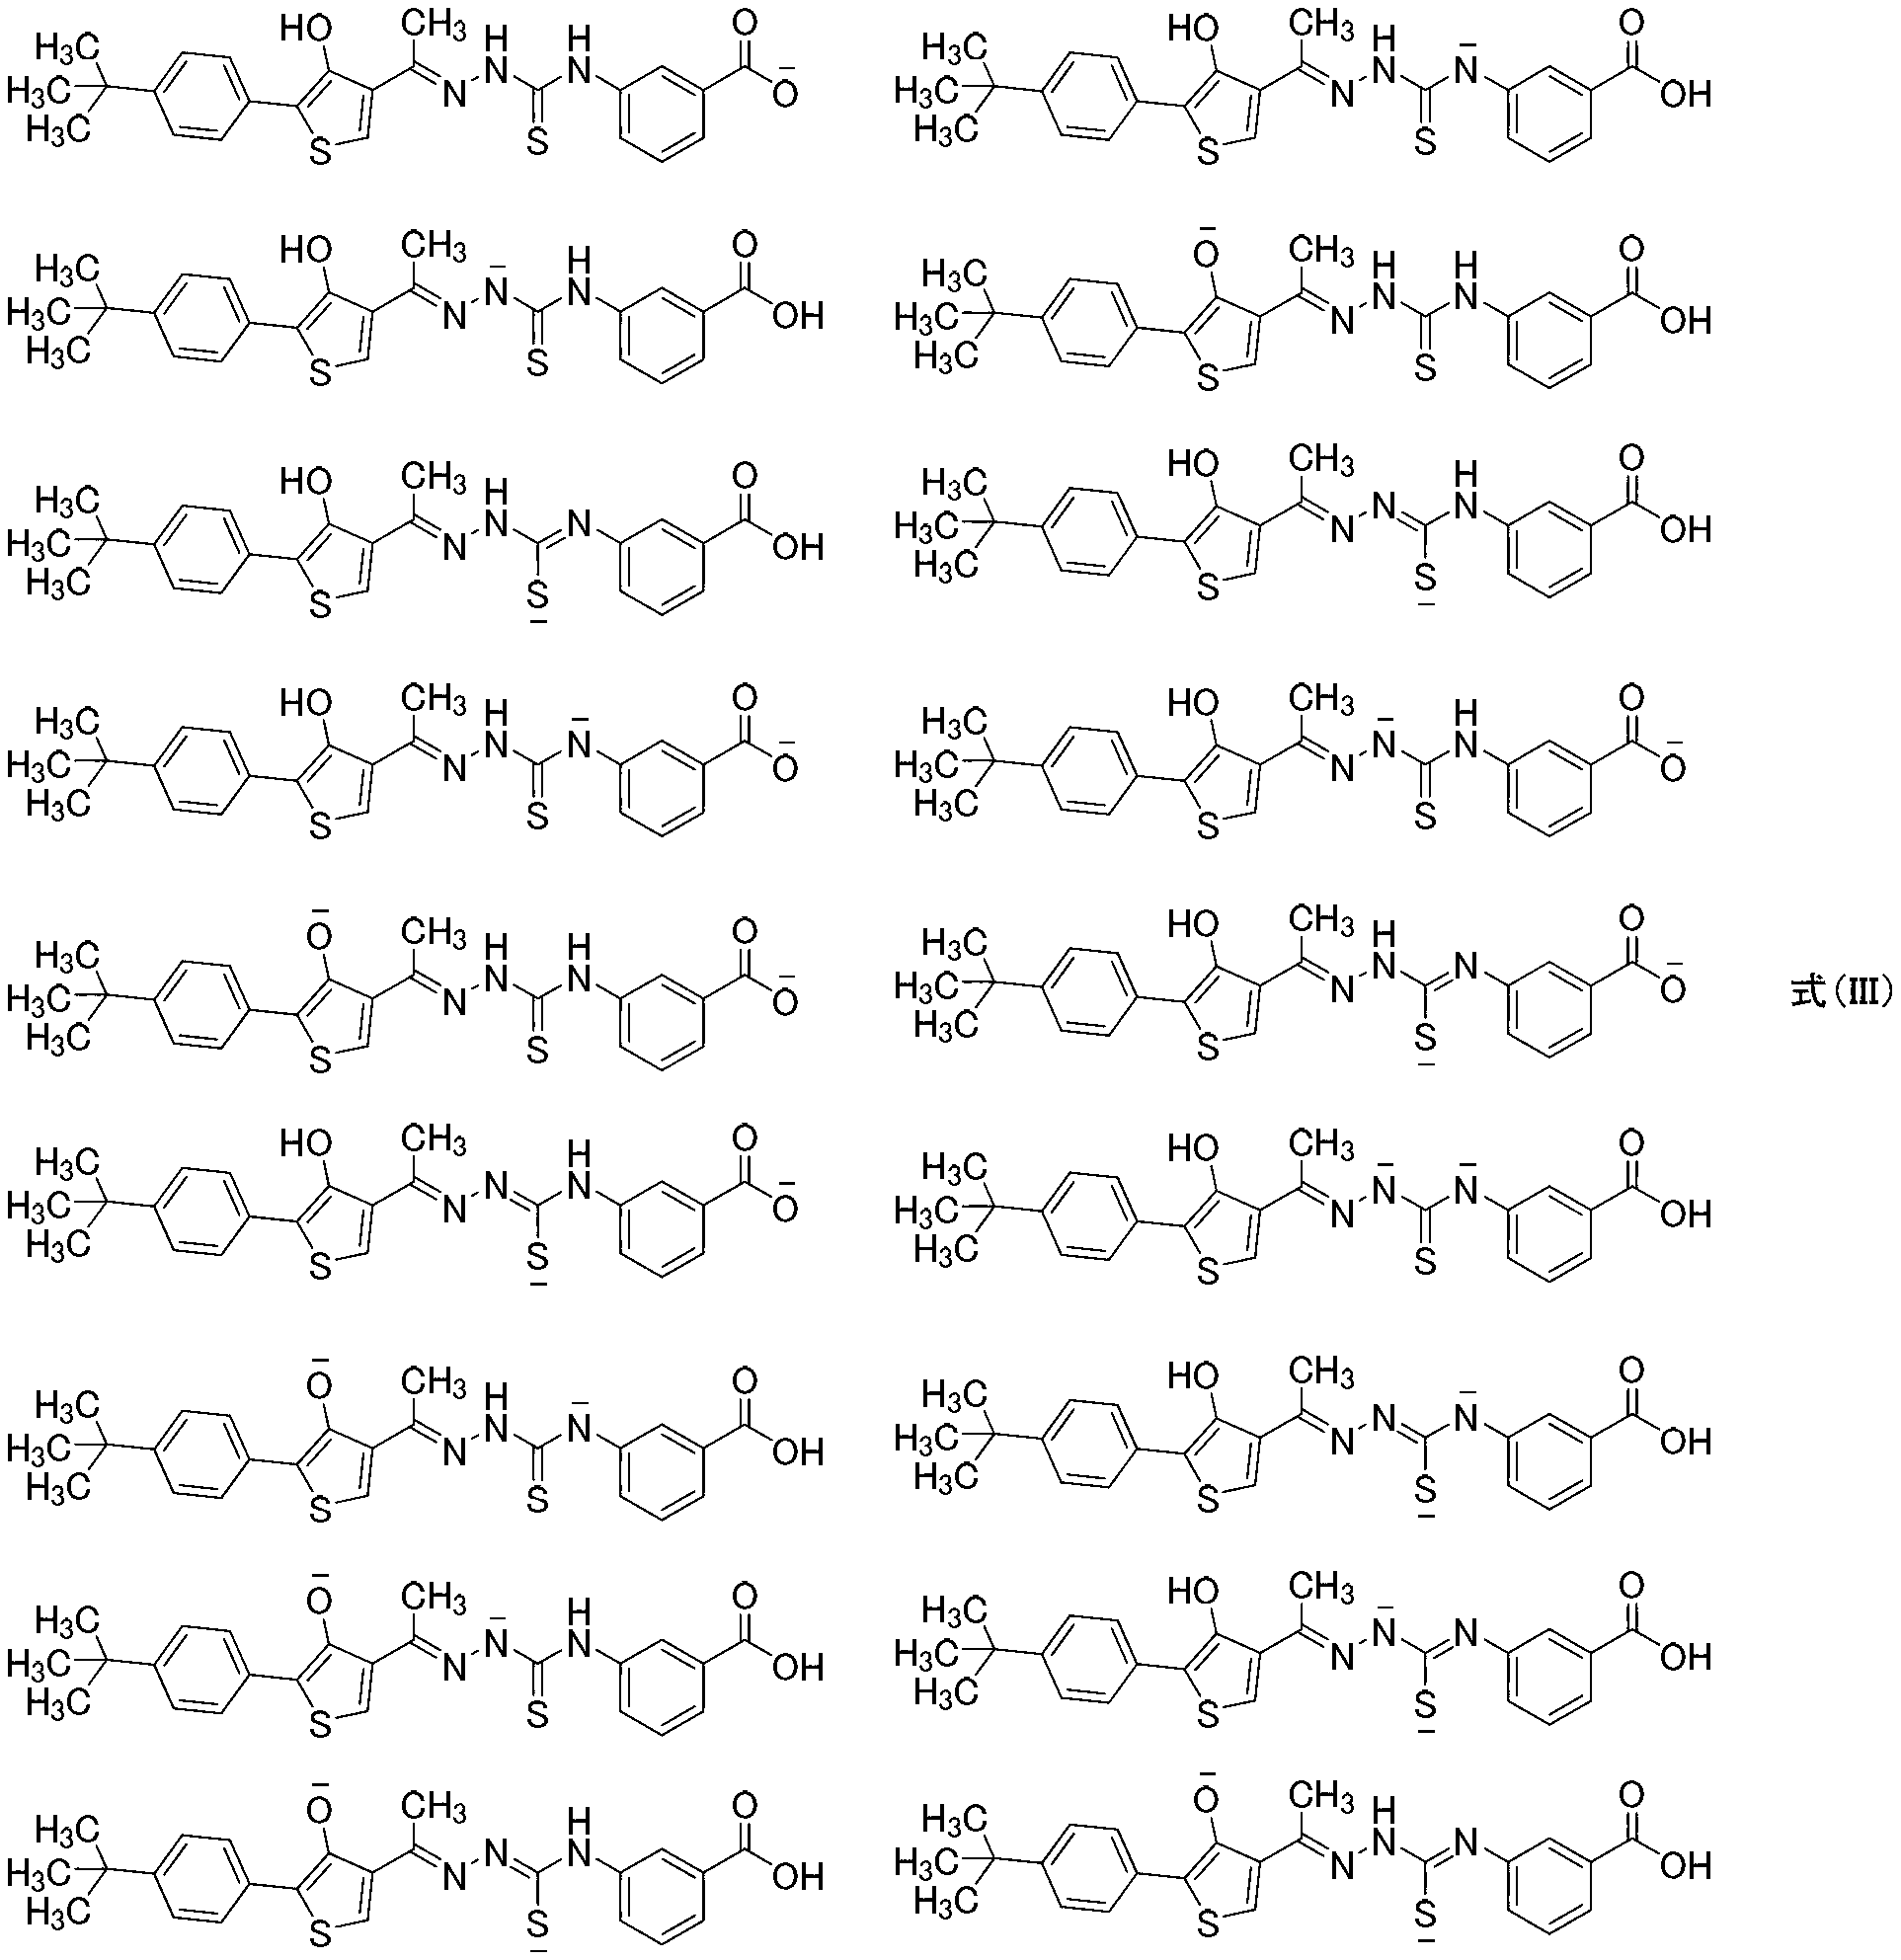 Organic amine salt of aminobenzoic acid derivative, and method for producing same